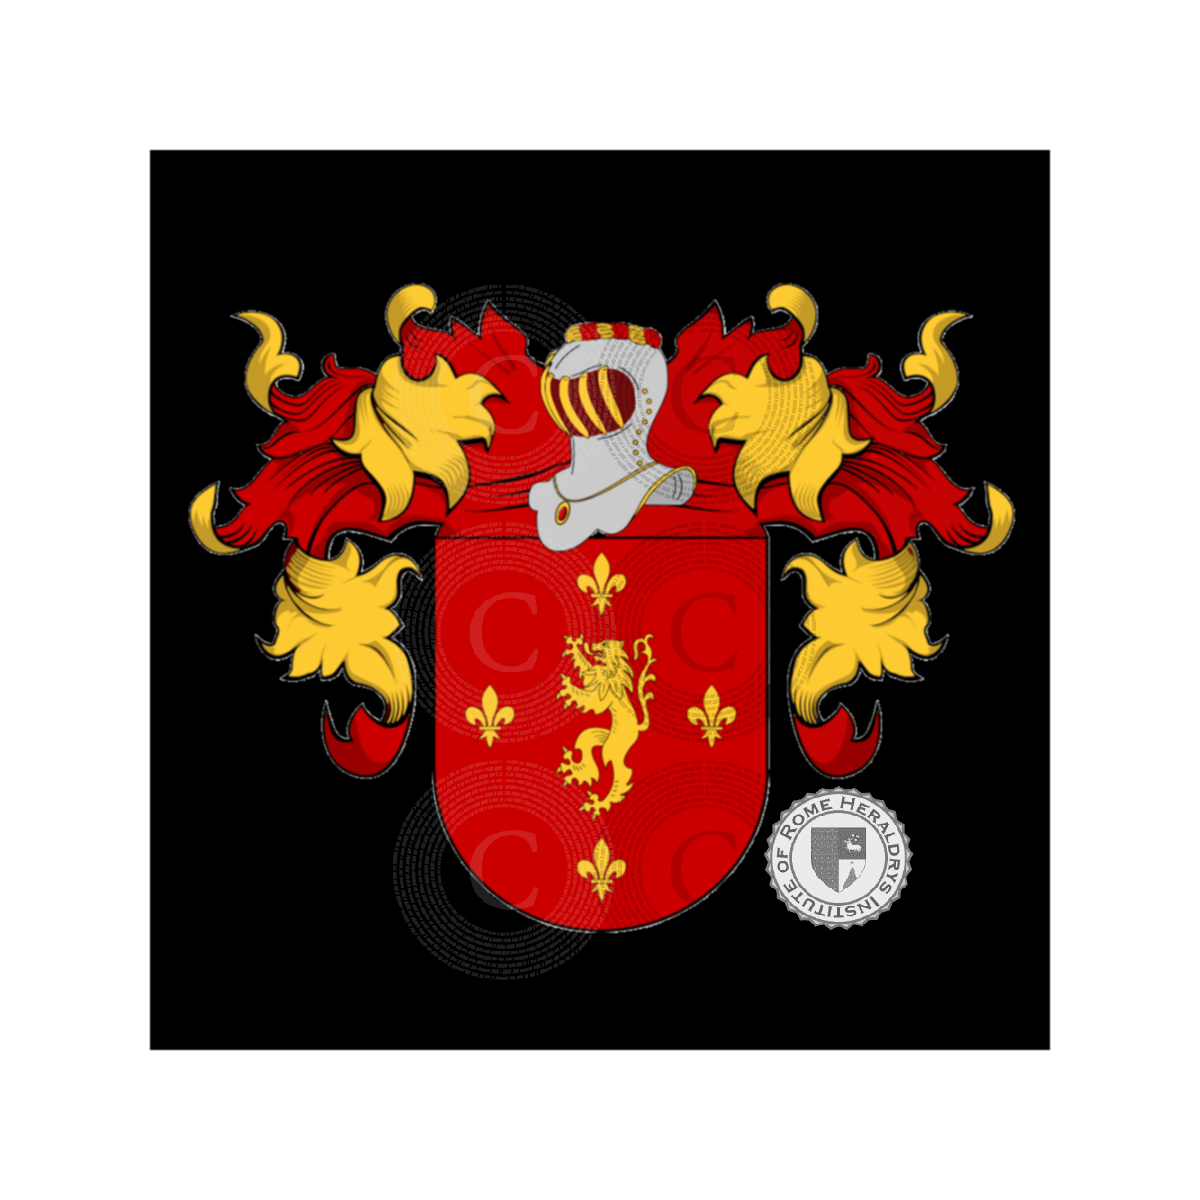 Wappen der FamilieDos Santos